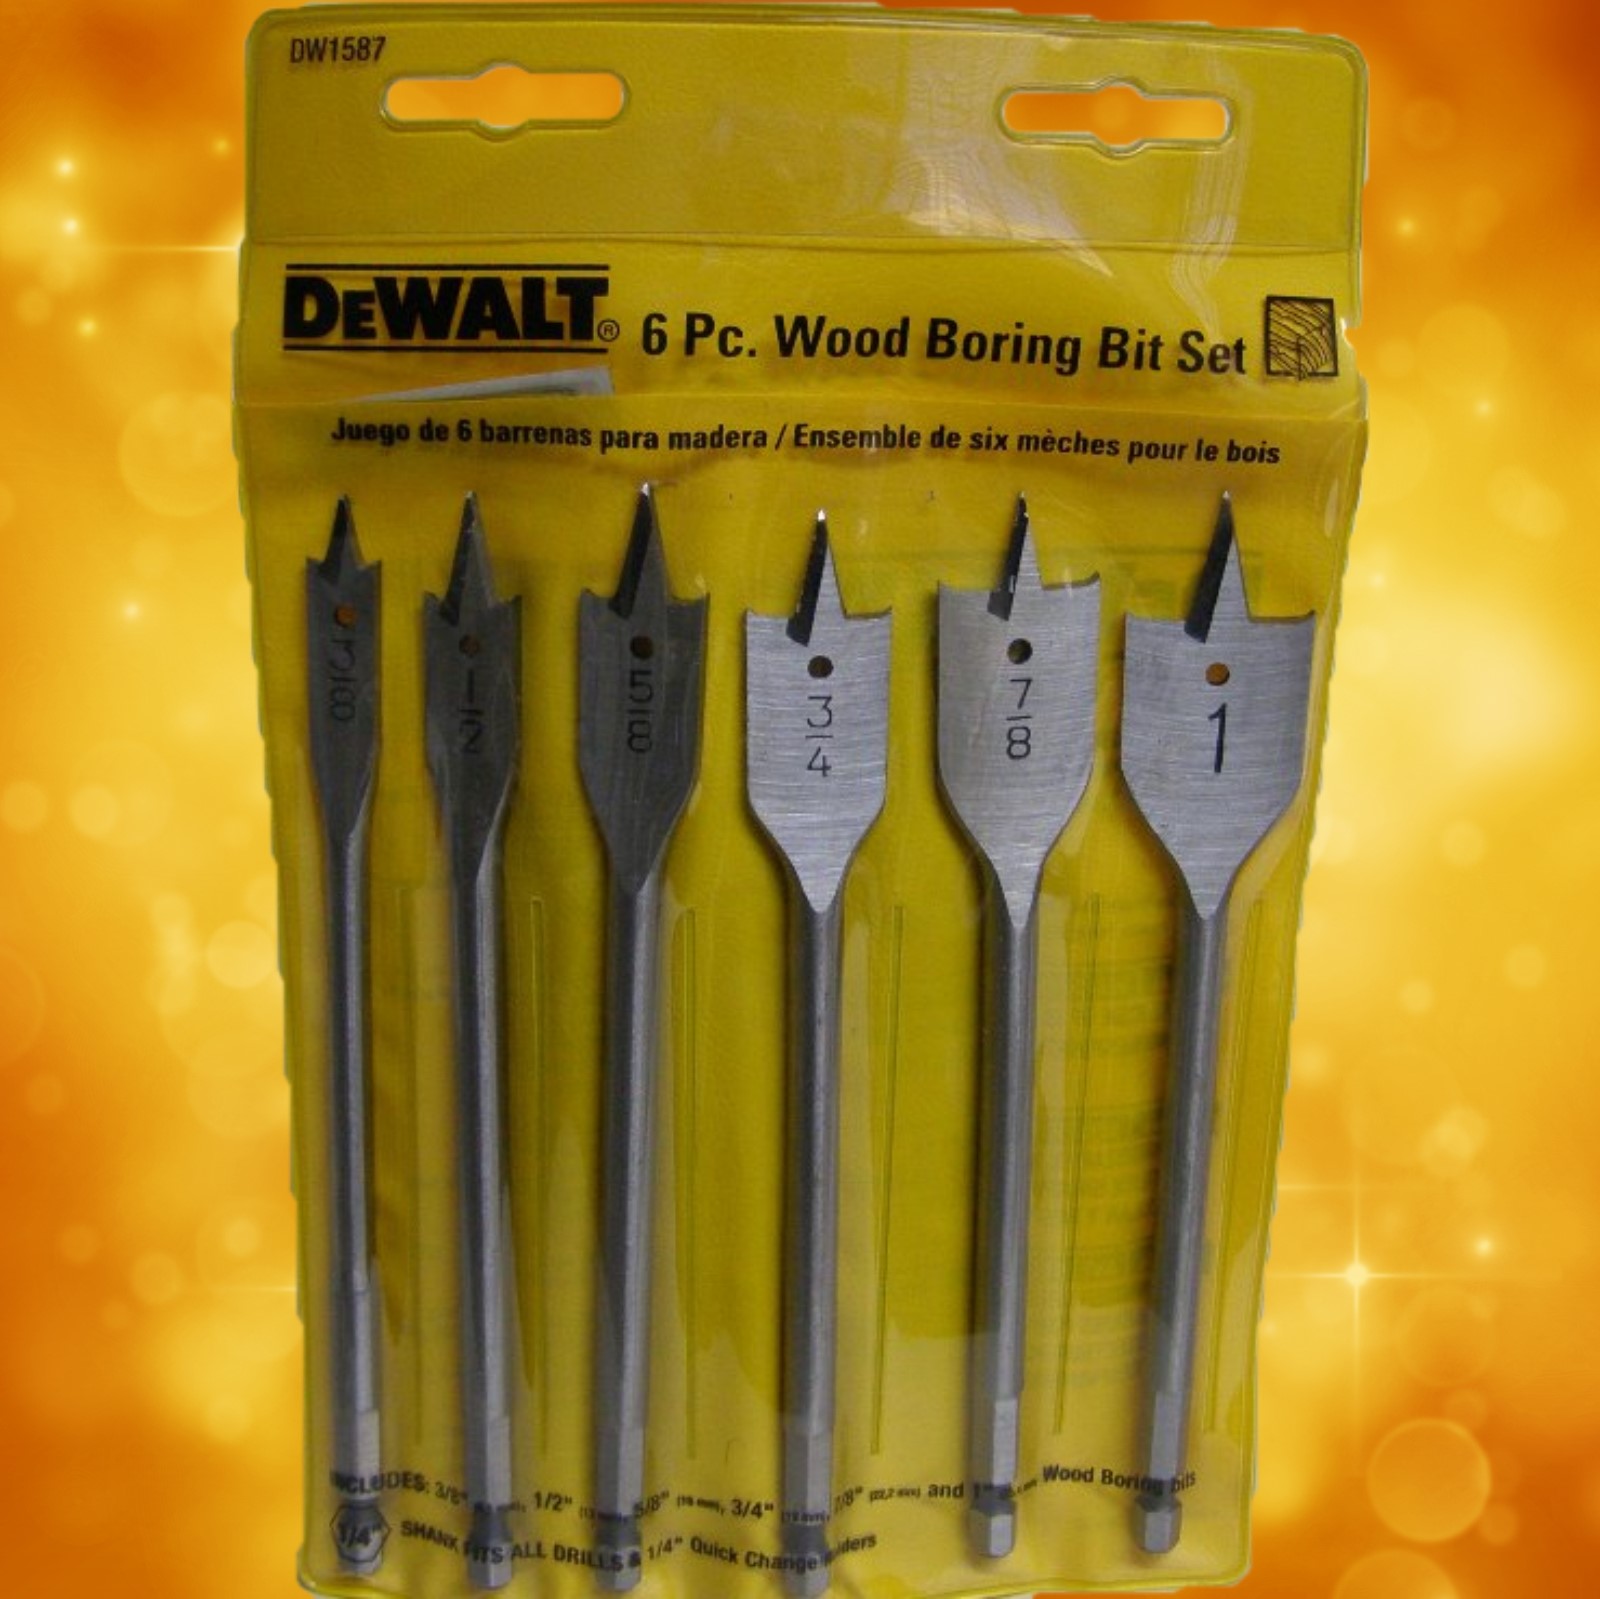 DeWalt 6 Pc. Wood Boring Bit Set DW1587